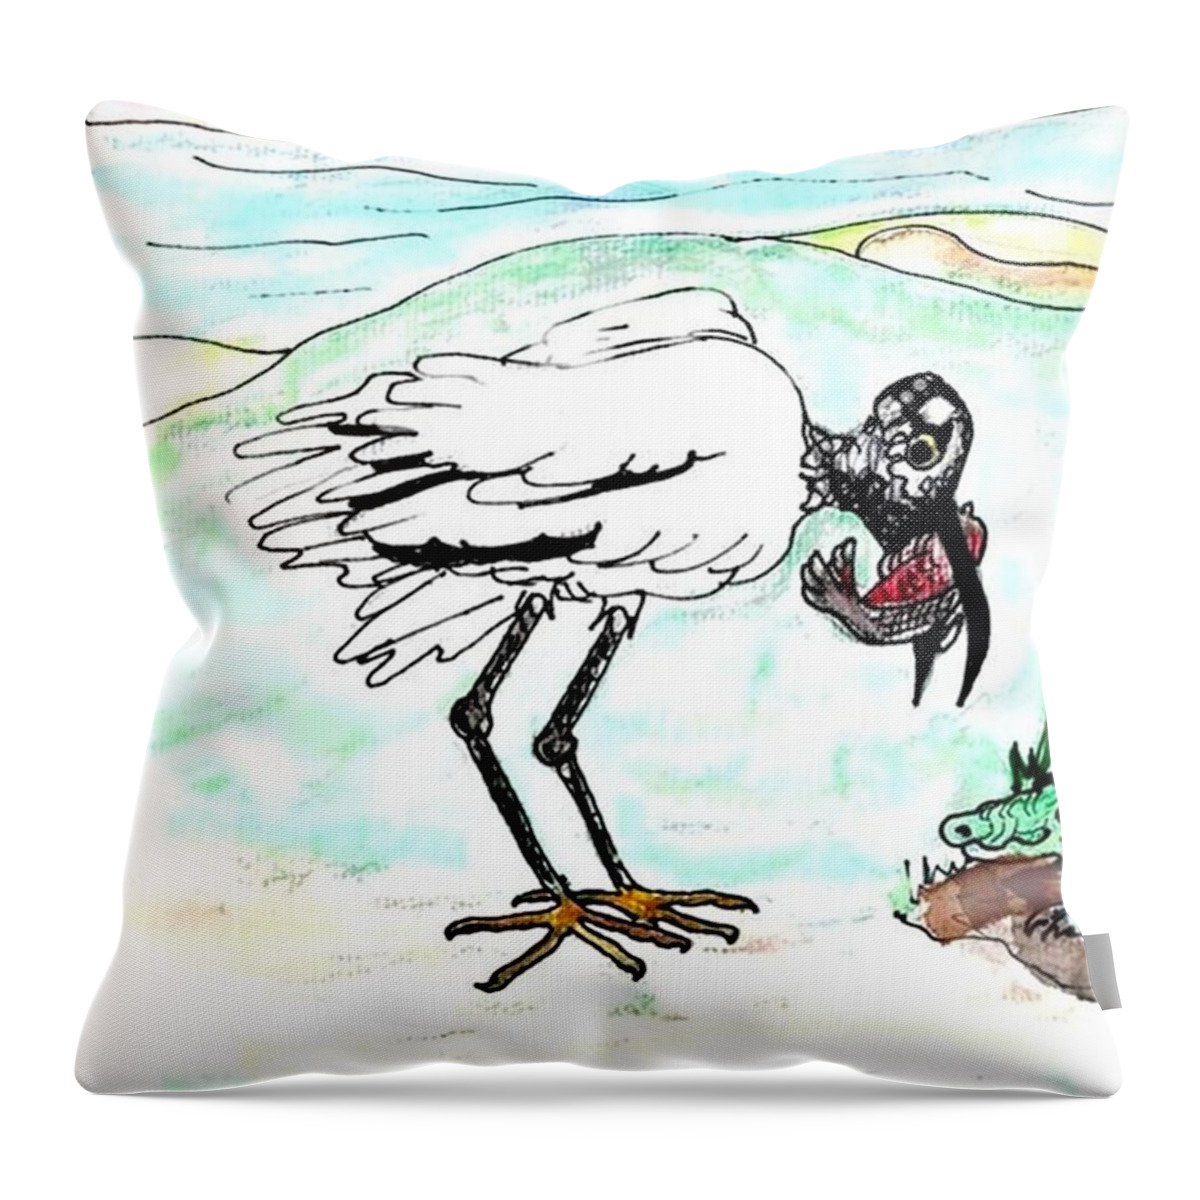 Woodstork Throw Pillow featuring the drawing Woodstork catch by Carol Allen Anfinsen